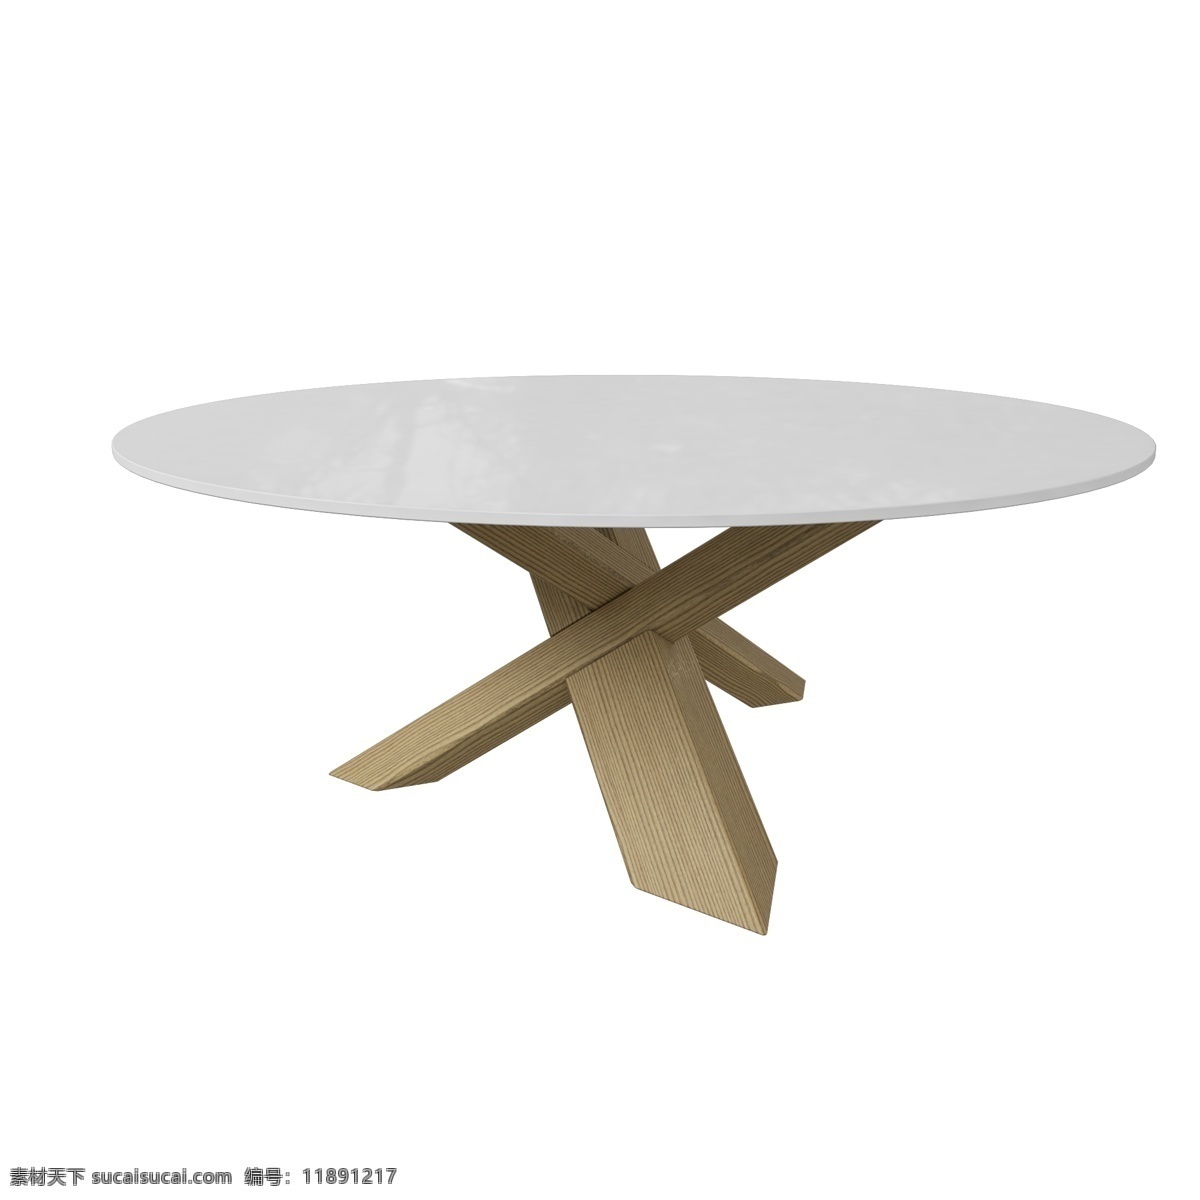 c4d 真实 立体 桌子 北欧风 餐桌 圆桌 时尚 简约 简易 迷你 创意 日式 原木 白色 光滑 渲染图 多功能